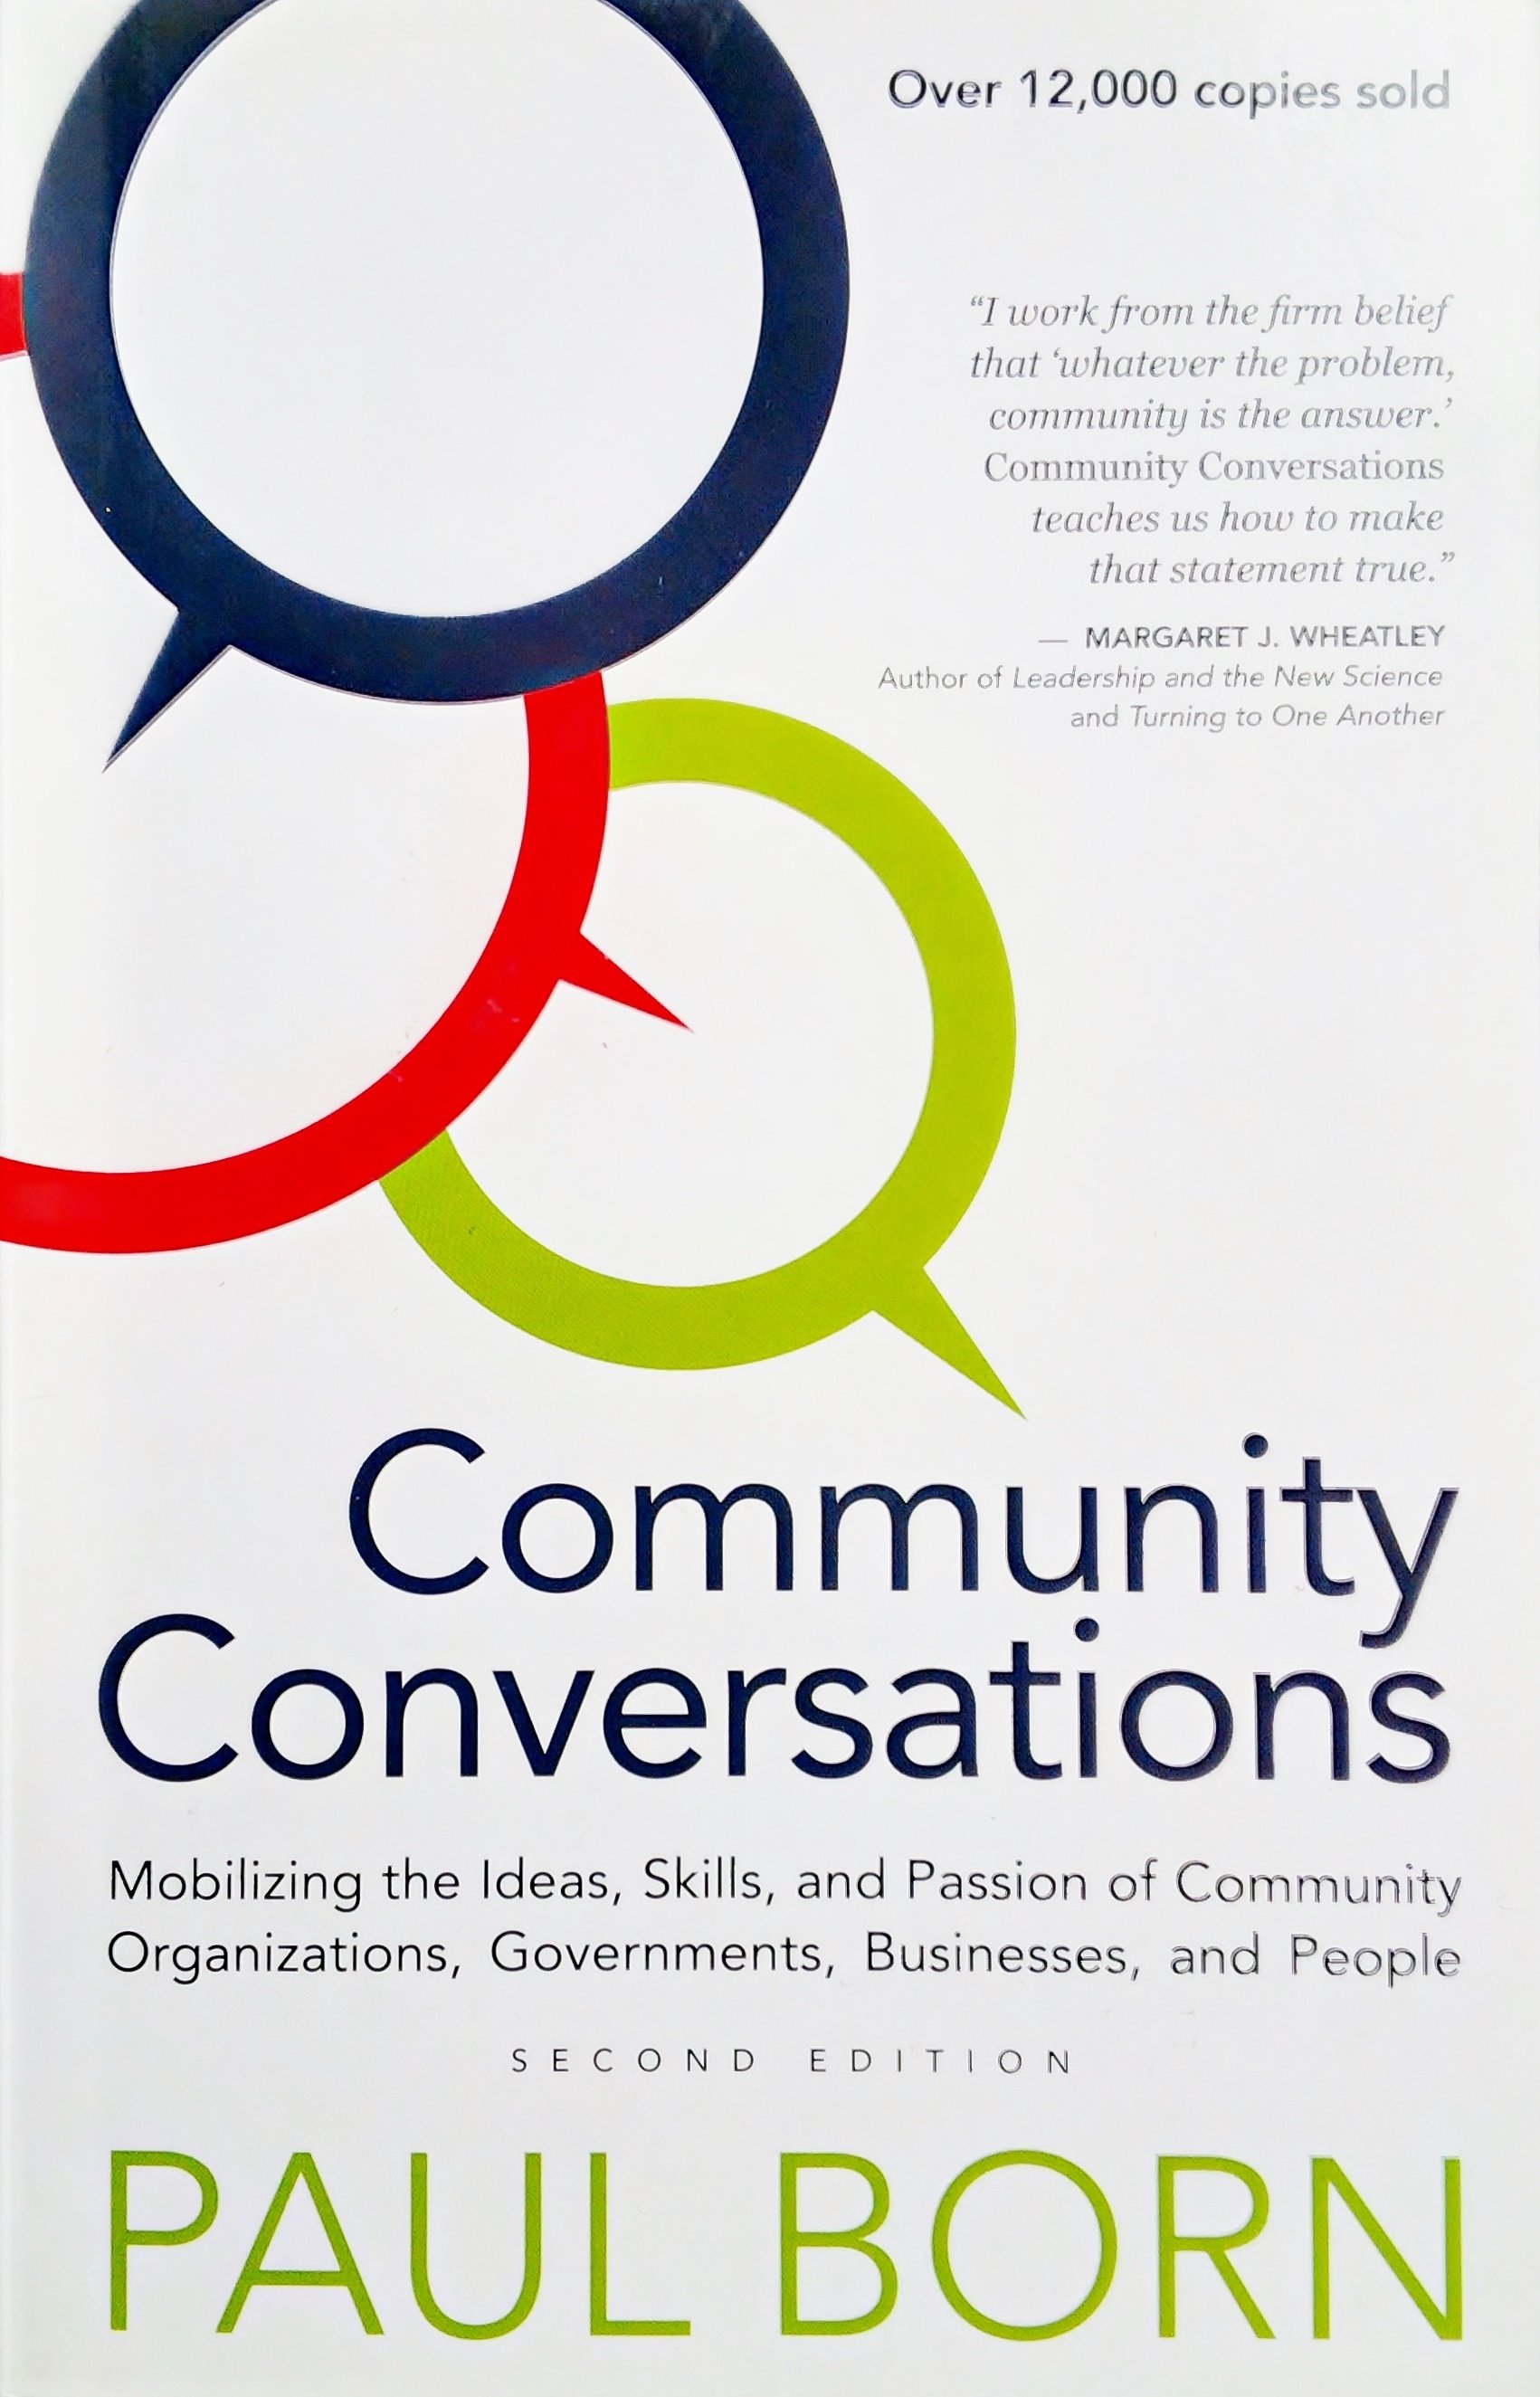 Deepening_Community_Book_Cover02.jpg